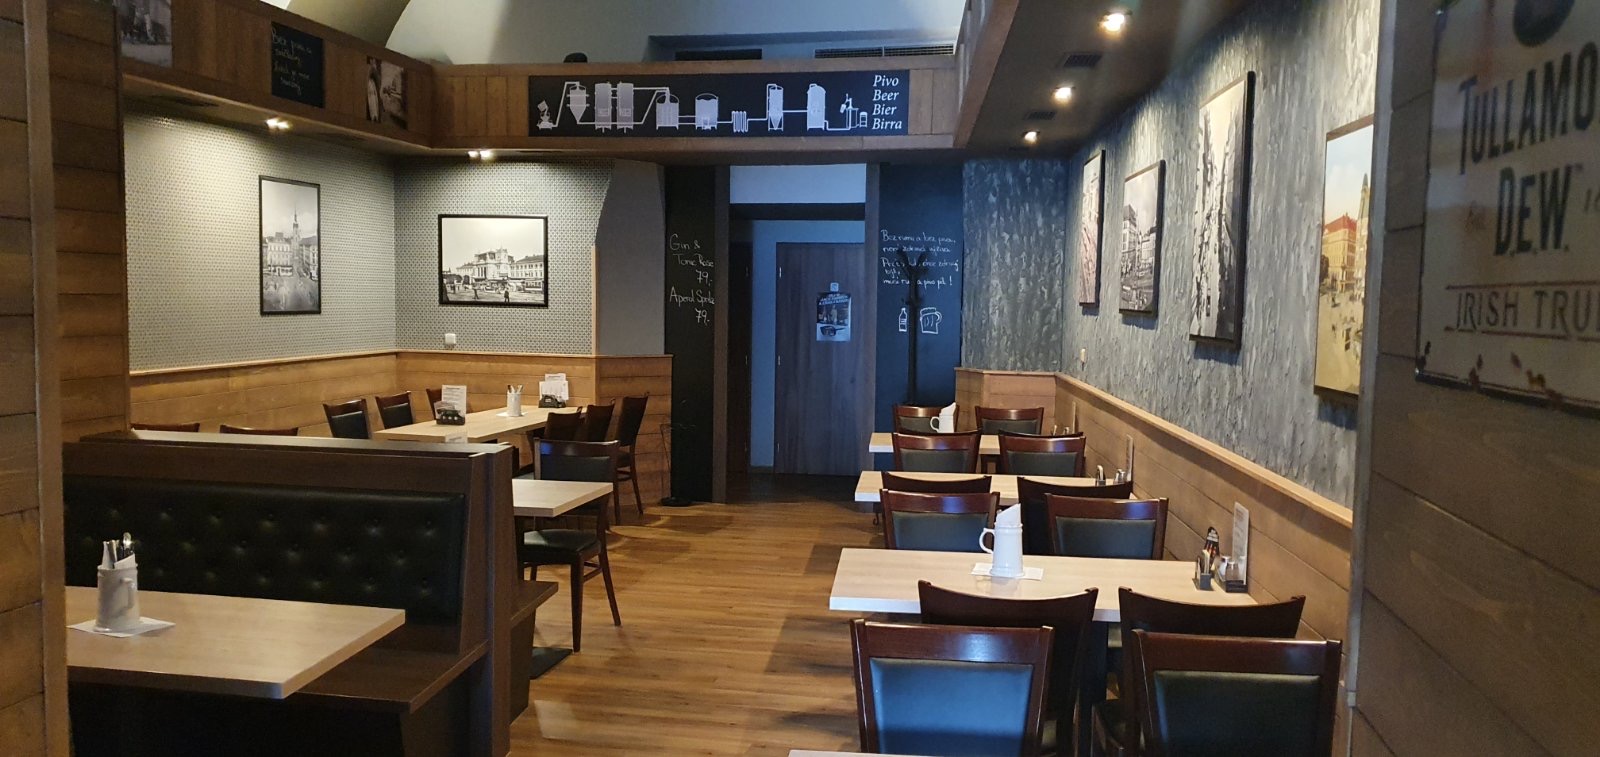 ŠTATL - restaurant, cafe, bar